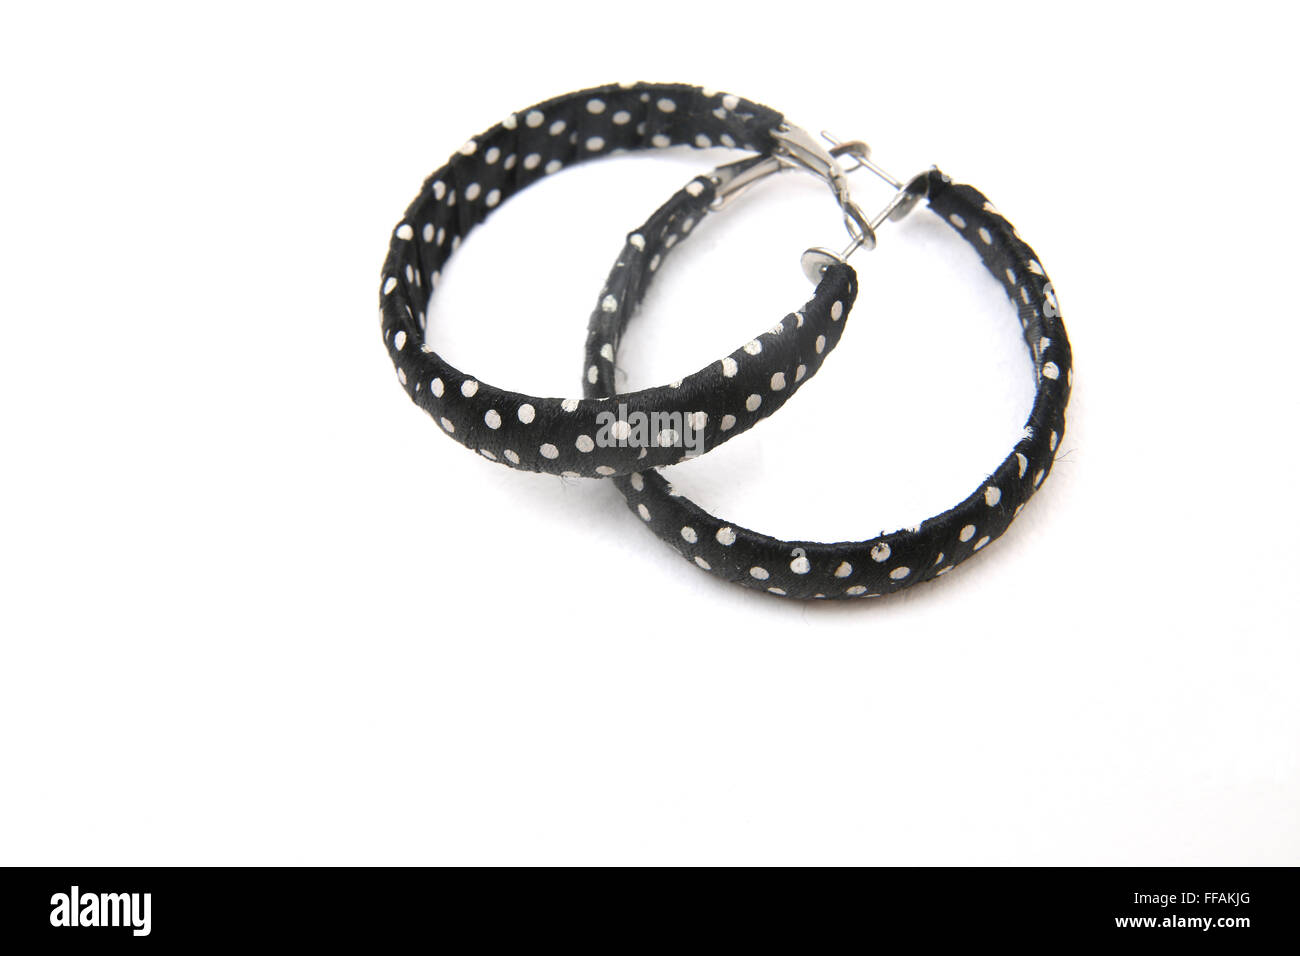 Dress Jewellery - Black And White Polka Dot Hoop Earrings Stock Photo